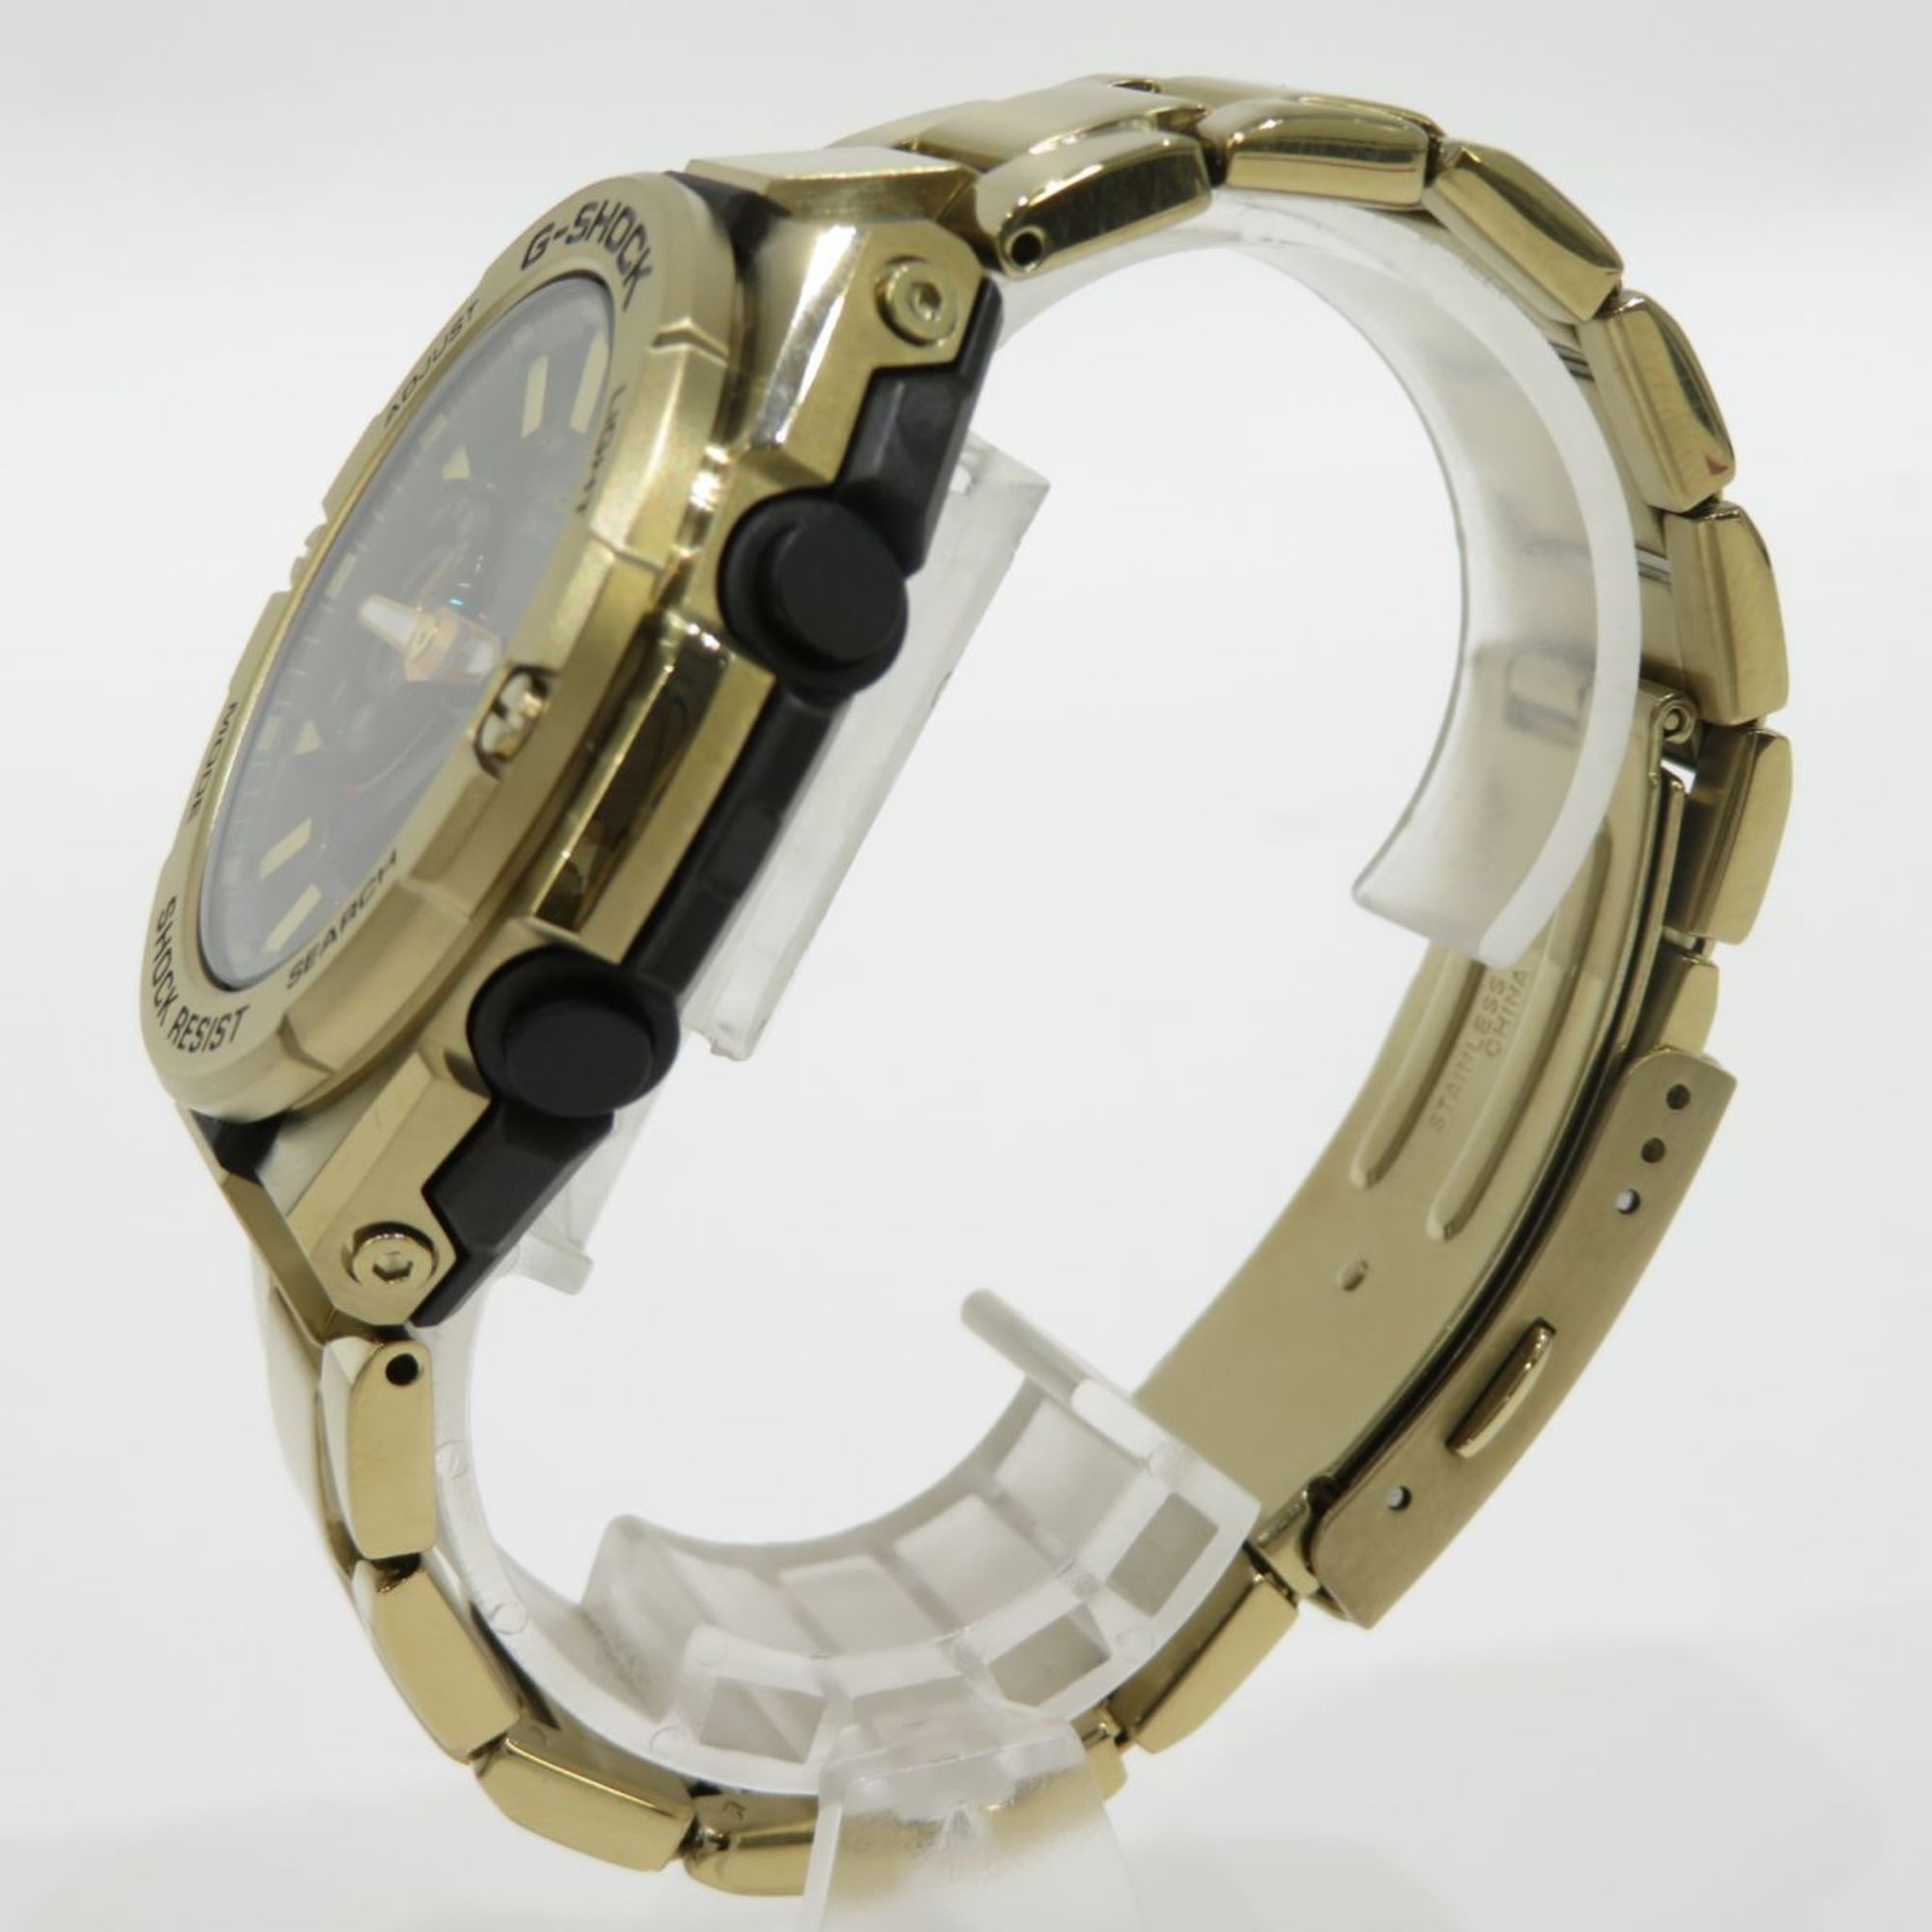 CASIO Casio G-SHOCK GST-B500GD-9AJF tough solar watch